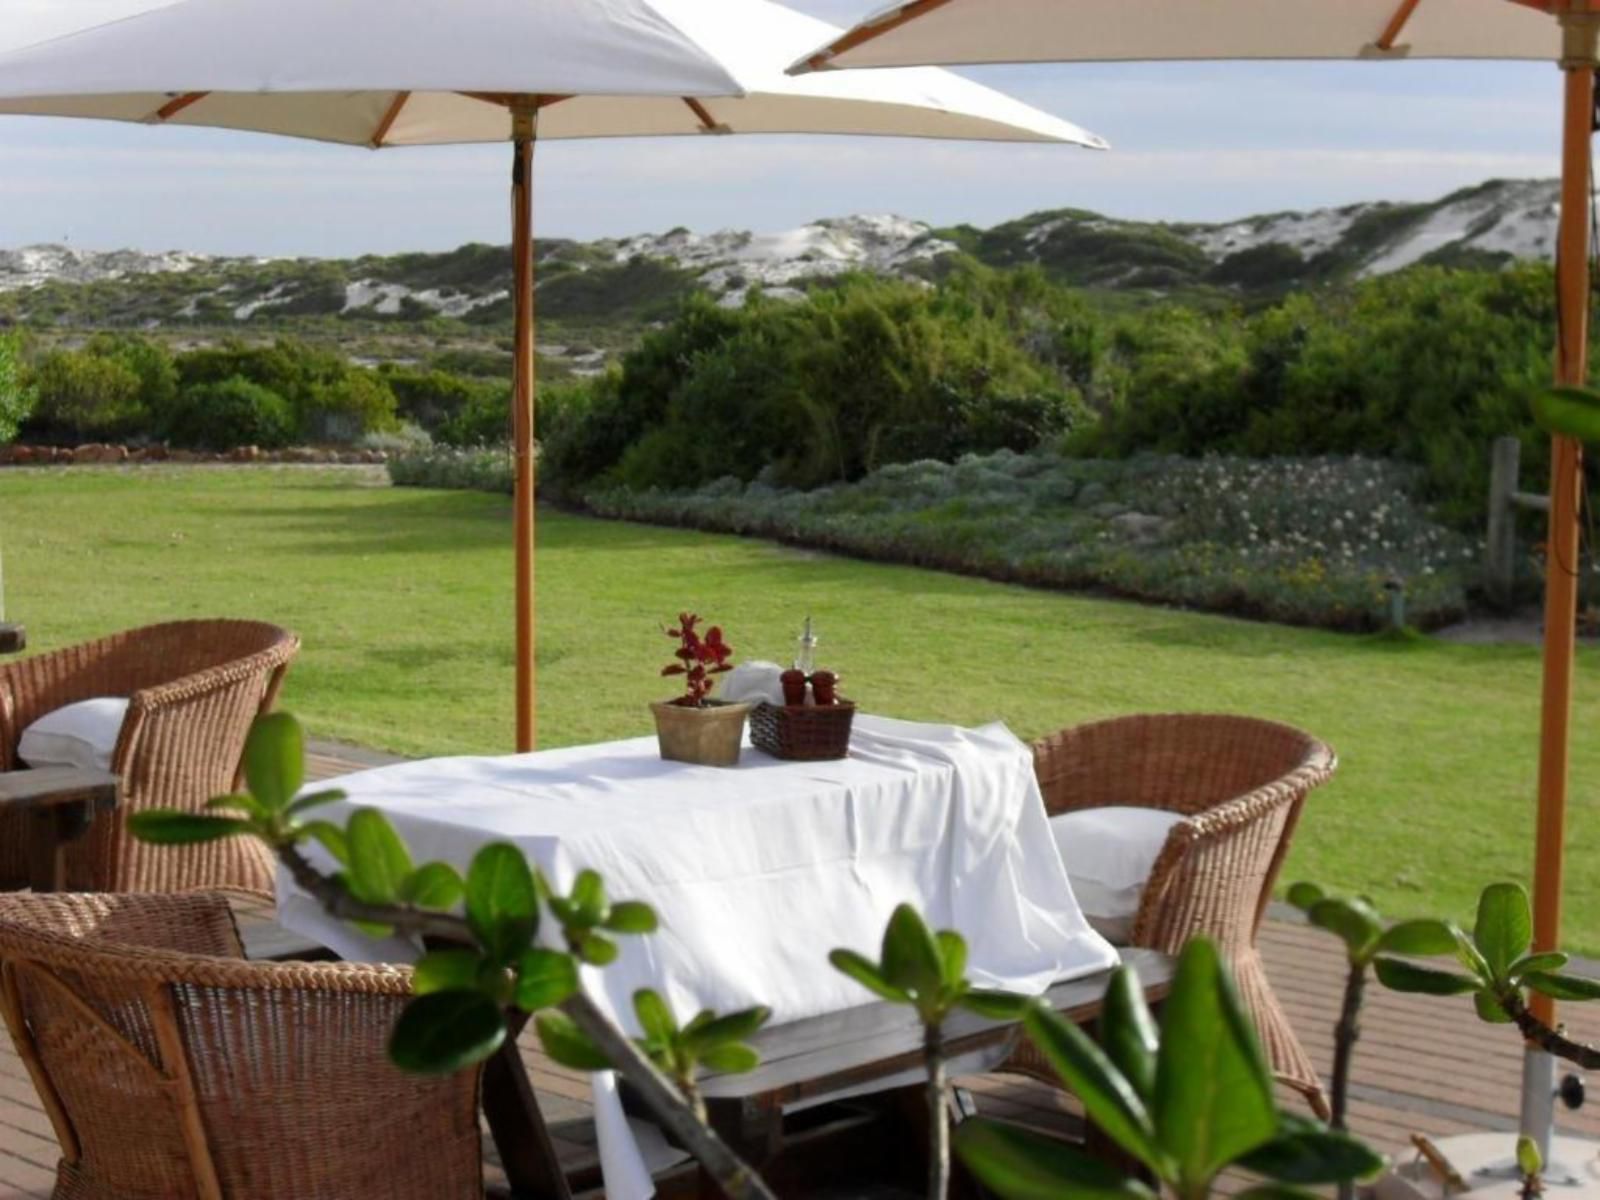 Draaihoek Lodge And Restaurant Elands Bay Western Cape South Africa 